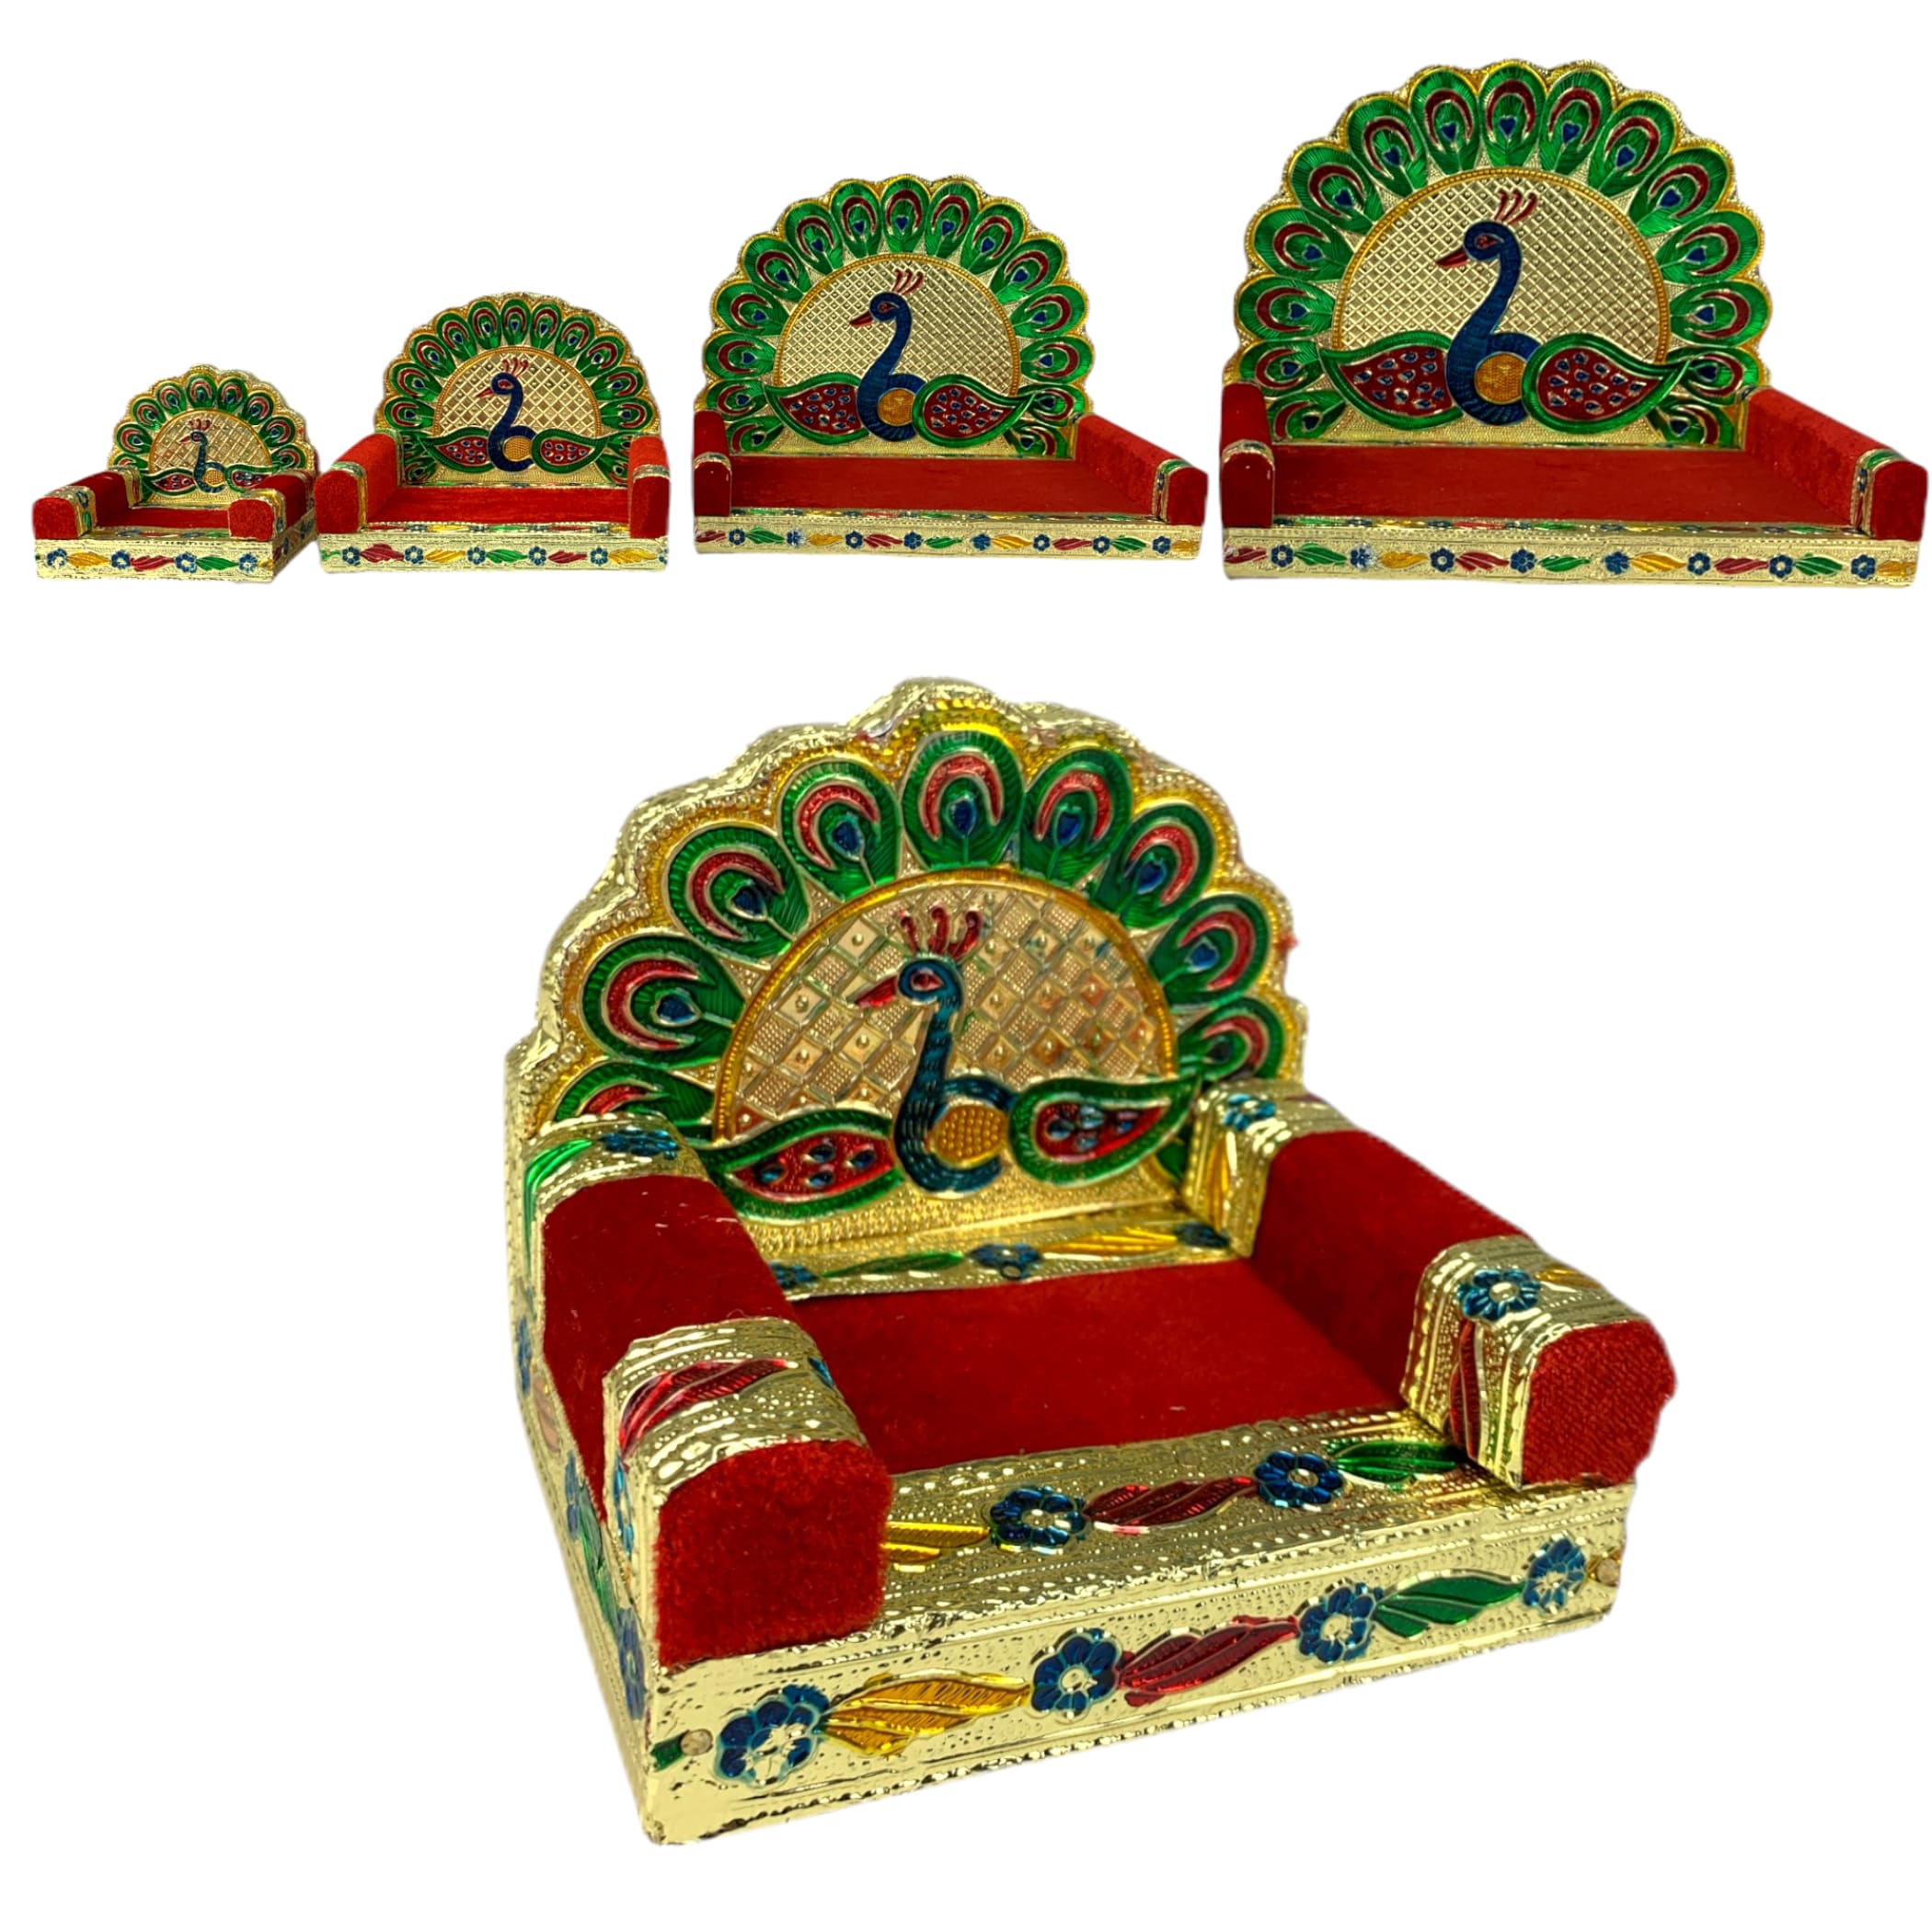 Peacock wooden laddu gopal sinhasan for pooja mandir kanha